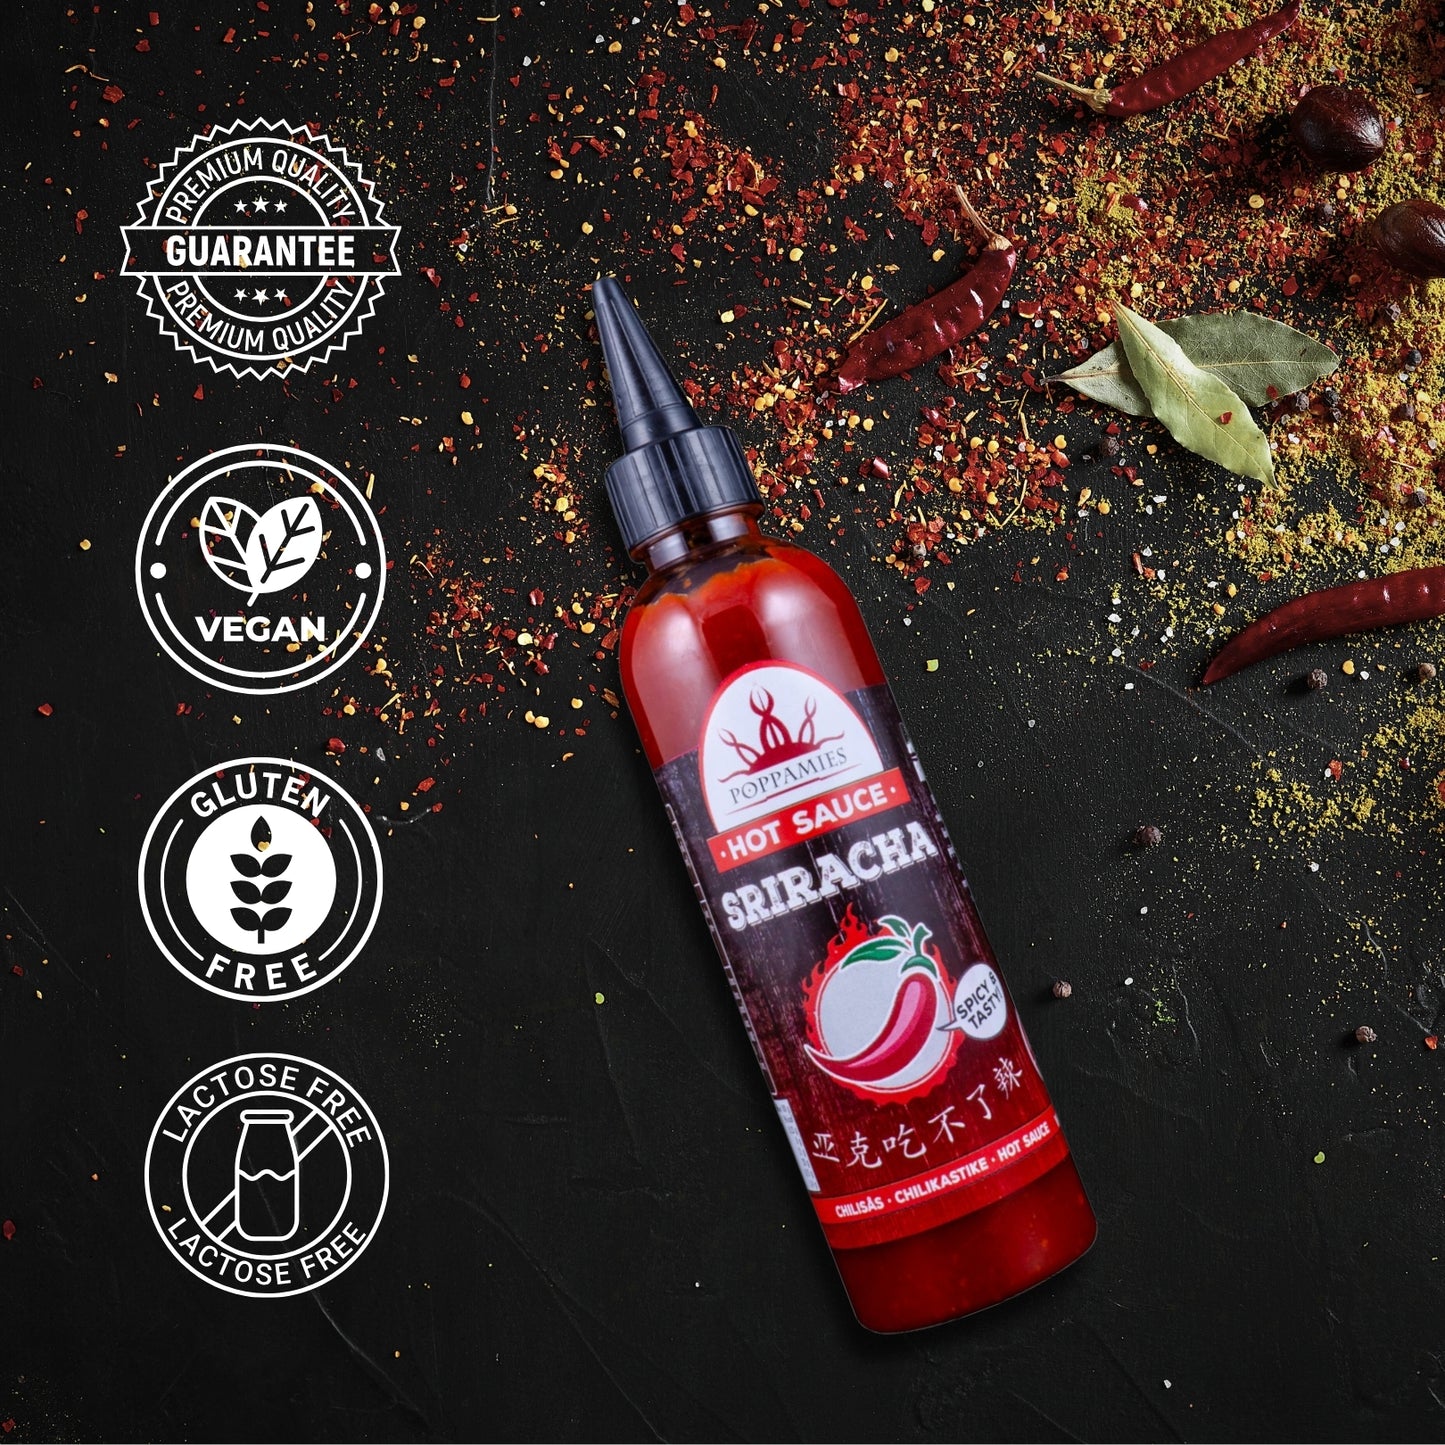 Poppamies Sriracha Hot Sauce - International Flavor Awards 2019 - Winner Sauce - Gluten Free Lactose Free Vegan - Spiciness: 4/10 - 275g